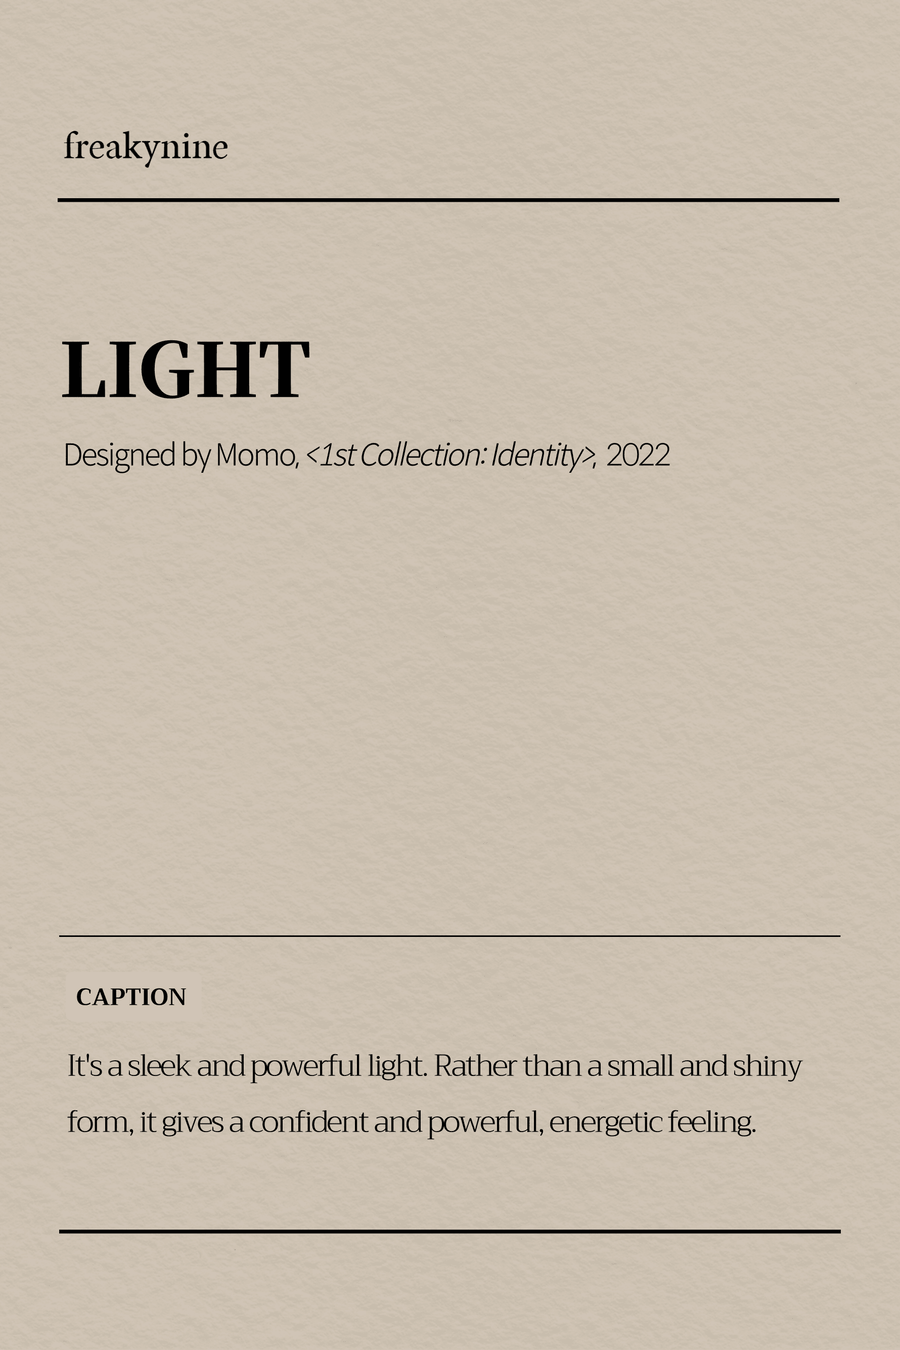 (Momo) LIGHT (2EA) - freakynine